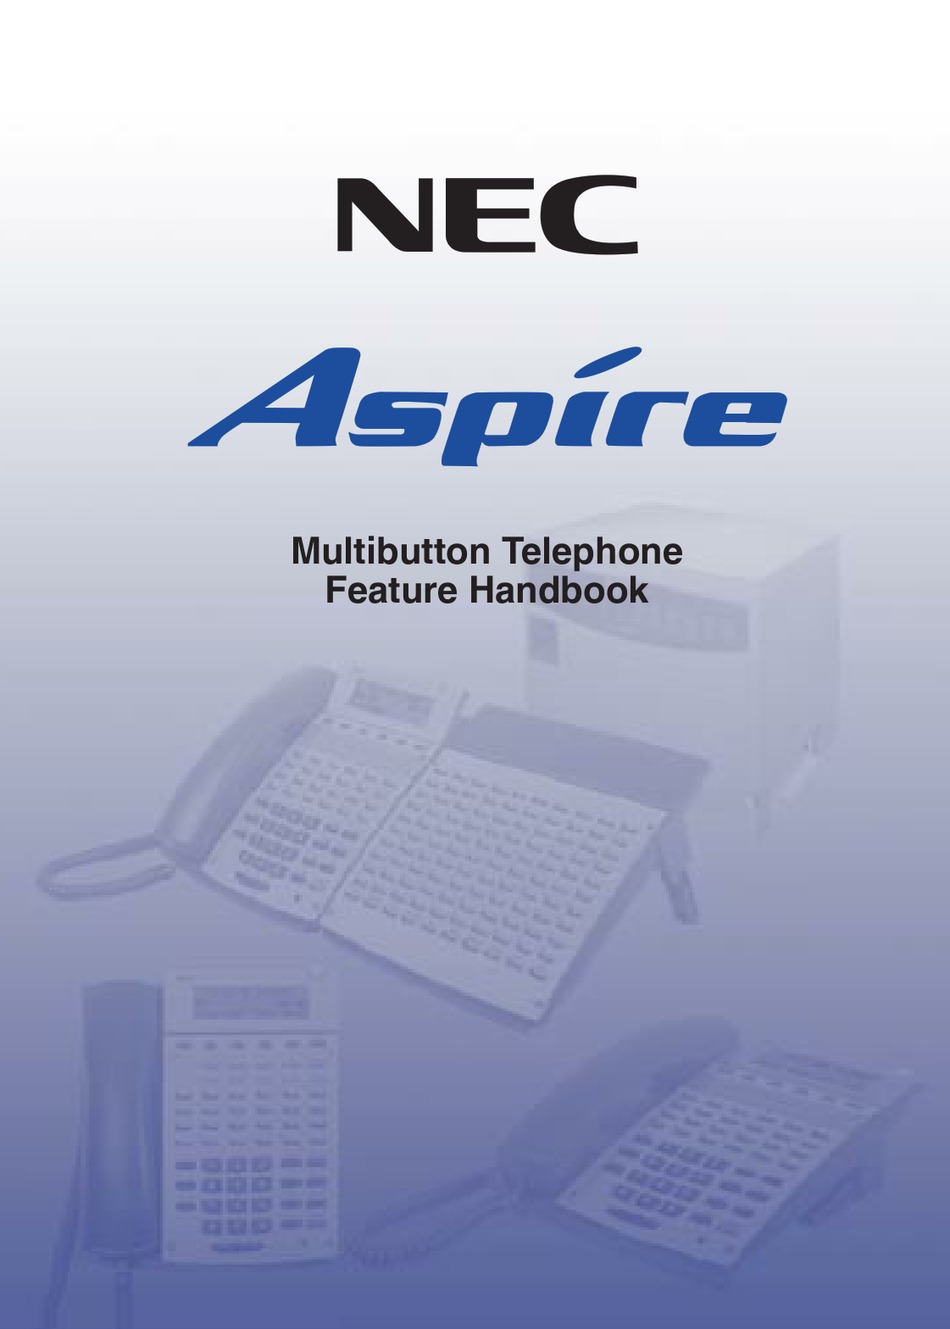 NEC ASPIRE HANDBOOK Pdf Download ManualsLib